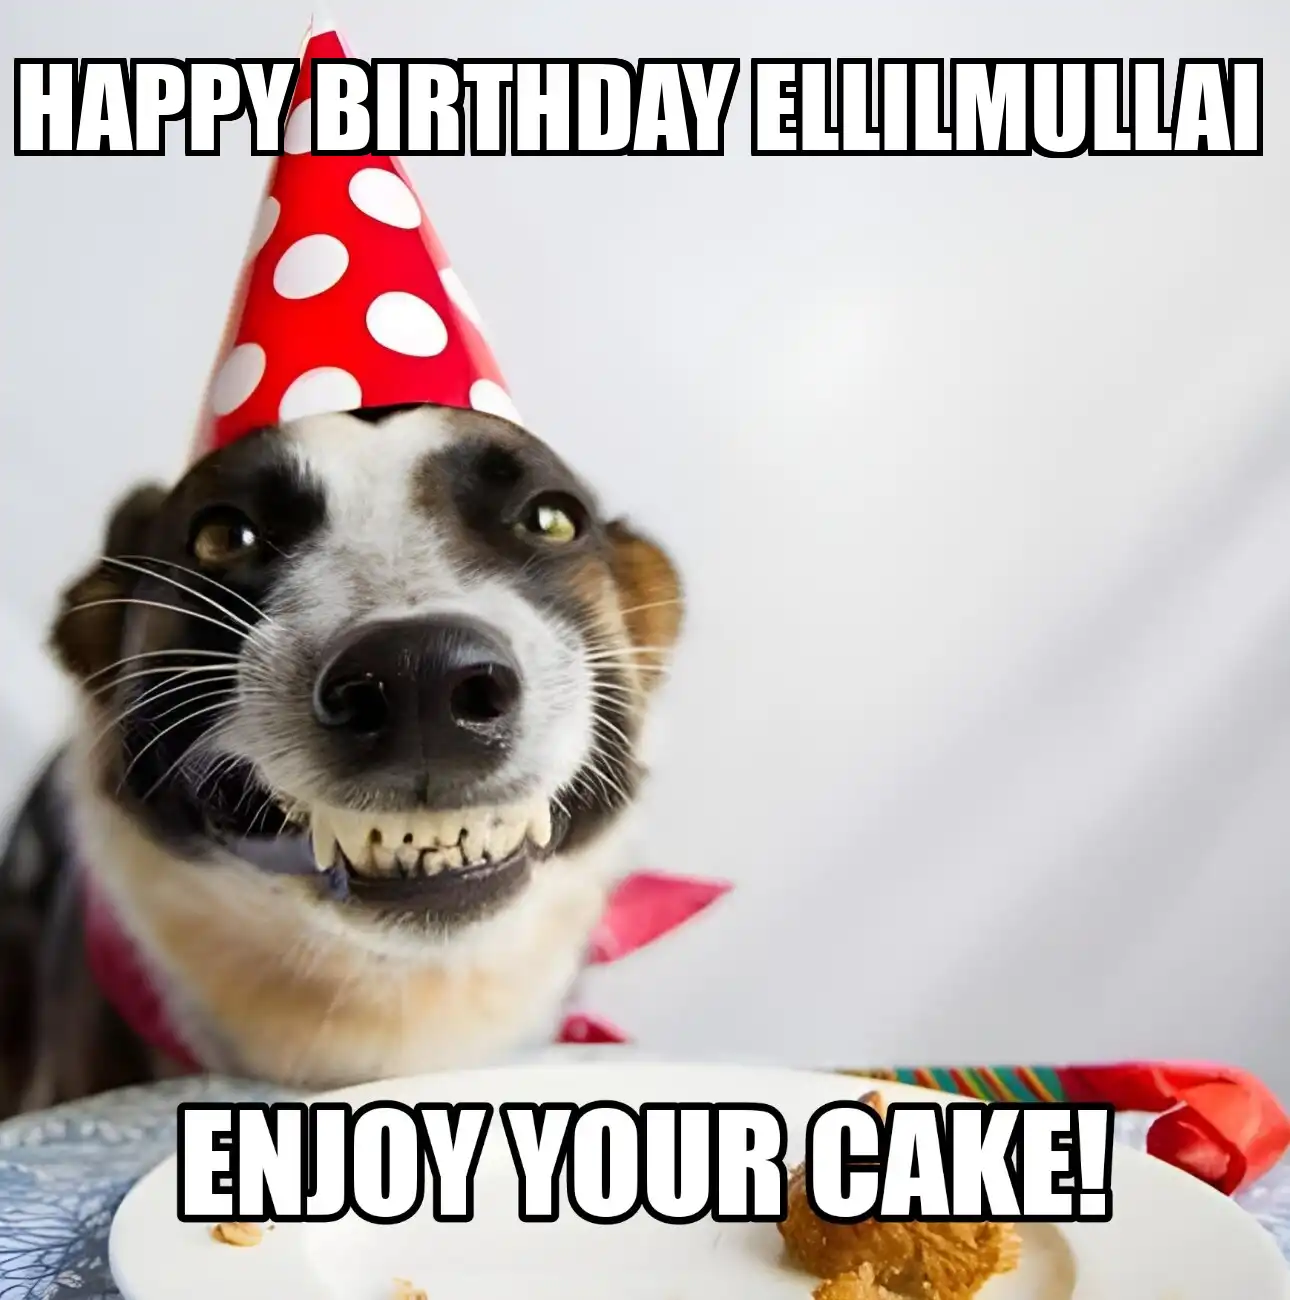 Happy Birthday Ellilmullai Enjoy Your Cake Dog Meme